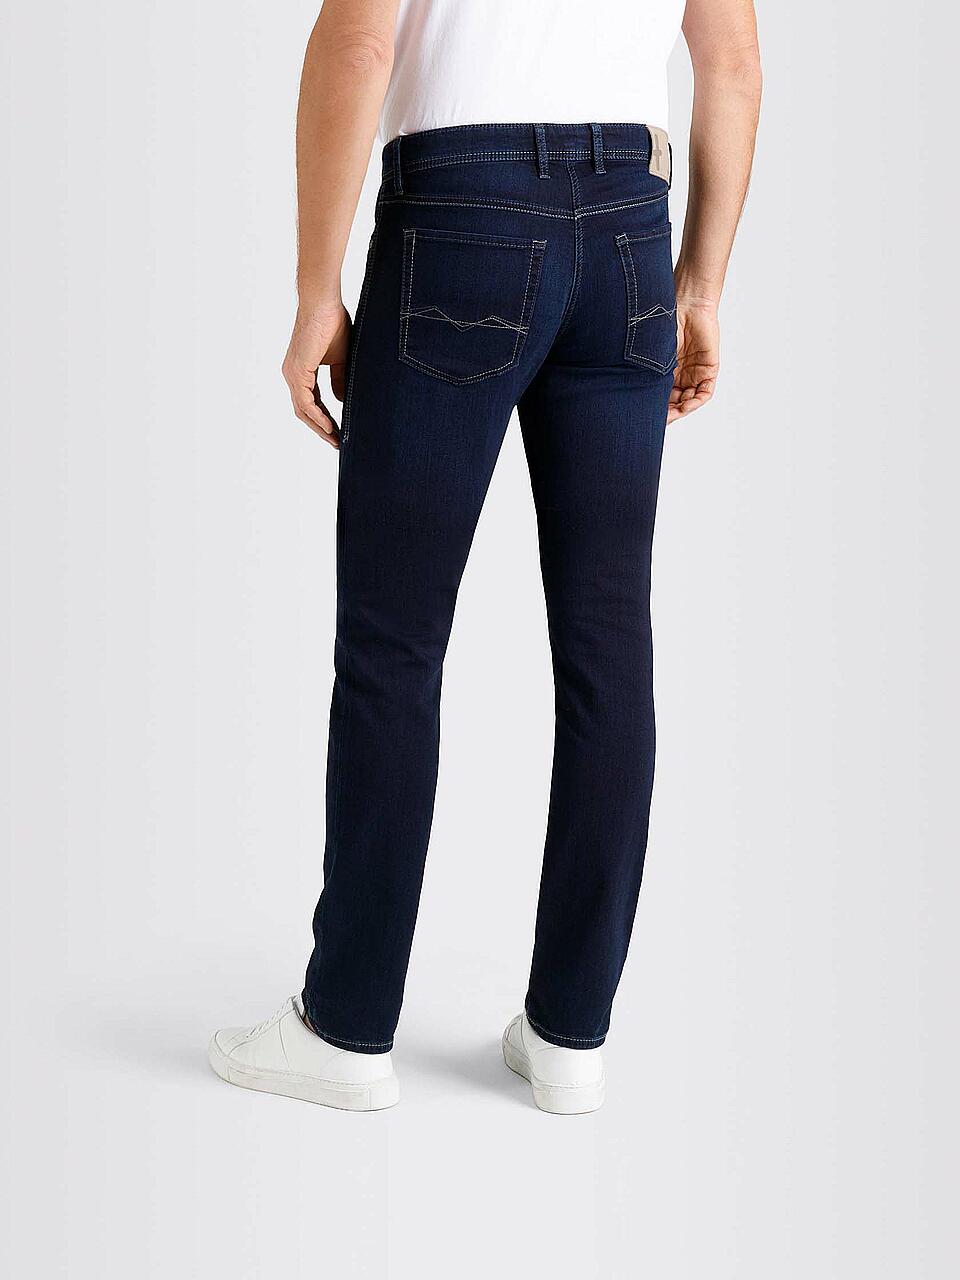 MAC | Joggjeans Slim-Fit "Jog N'Jeans"  | blau